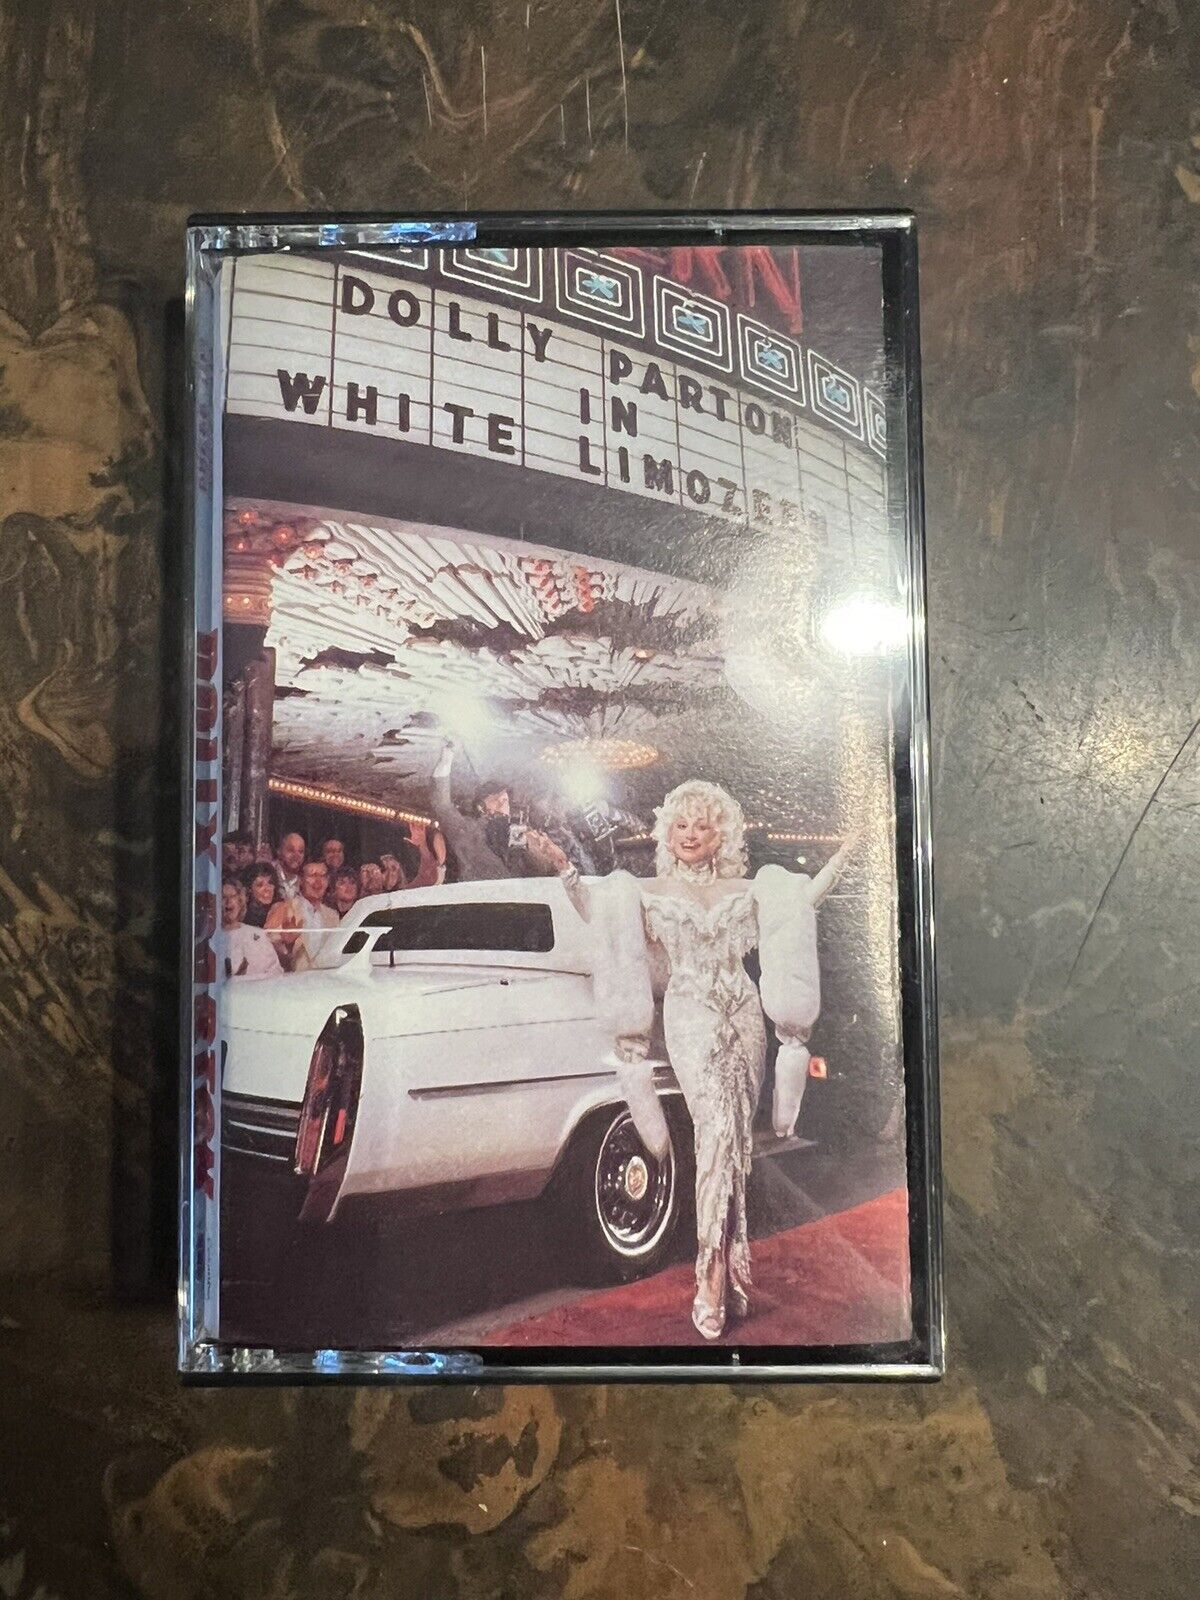 White Limozeen By Dolly Parton (Cassette, 1989)